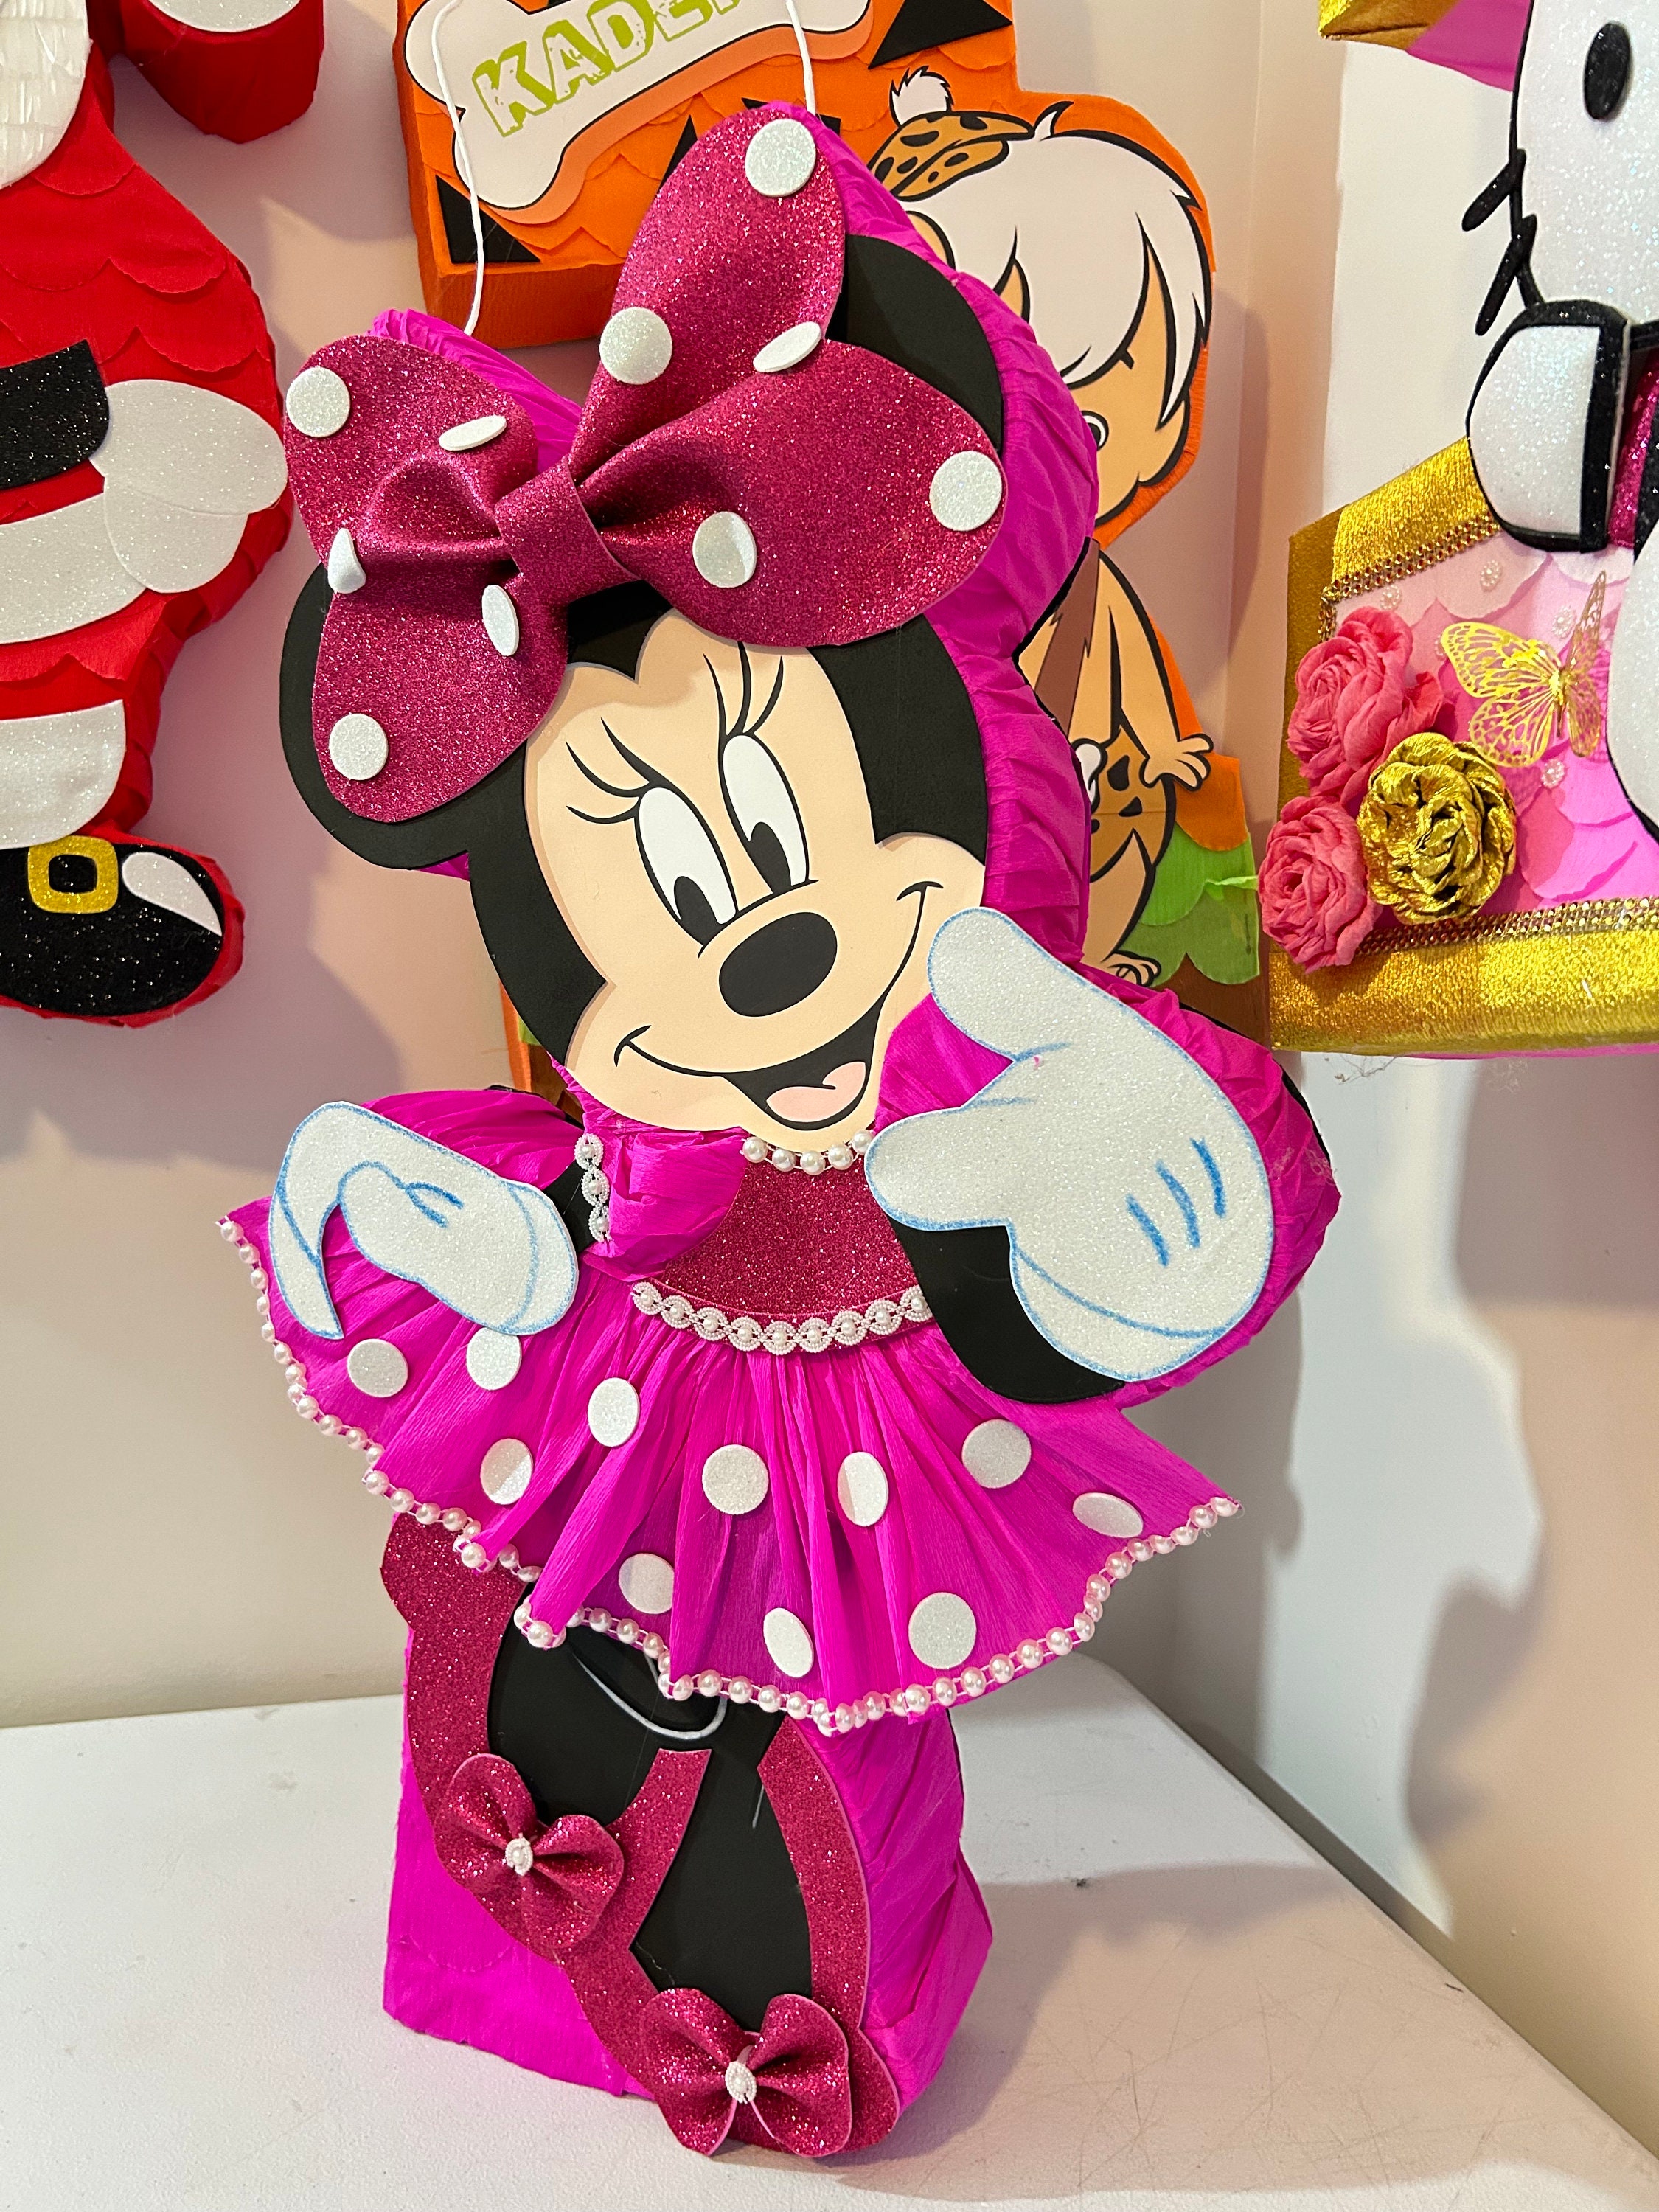 Minnie Mouse piñata para fiesta de cumpleaños, 30x20x4